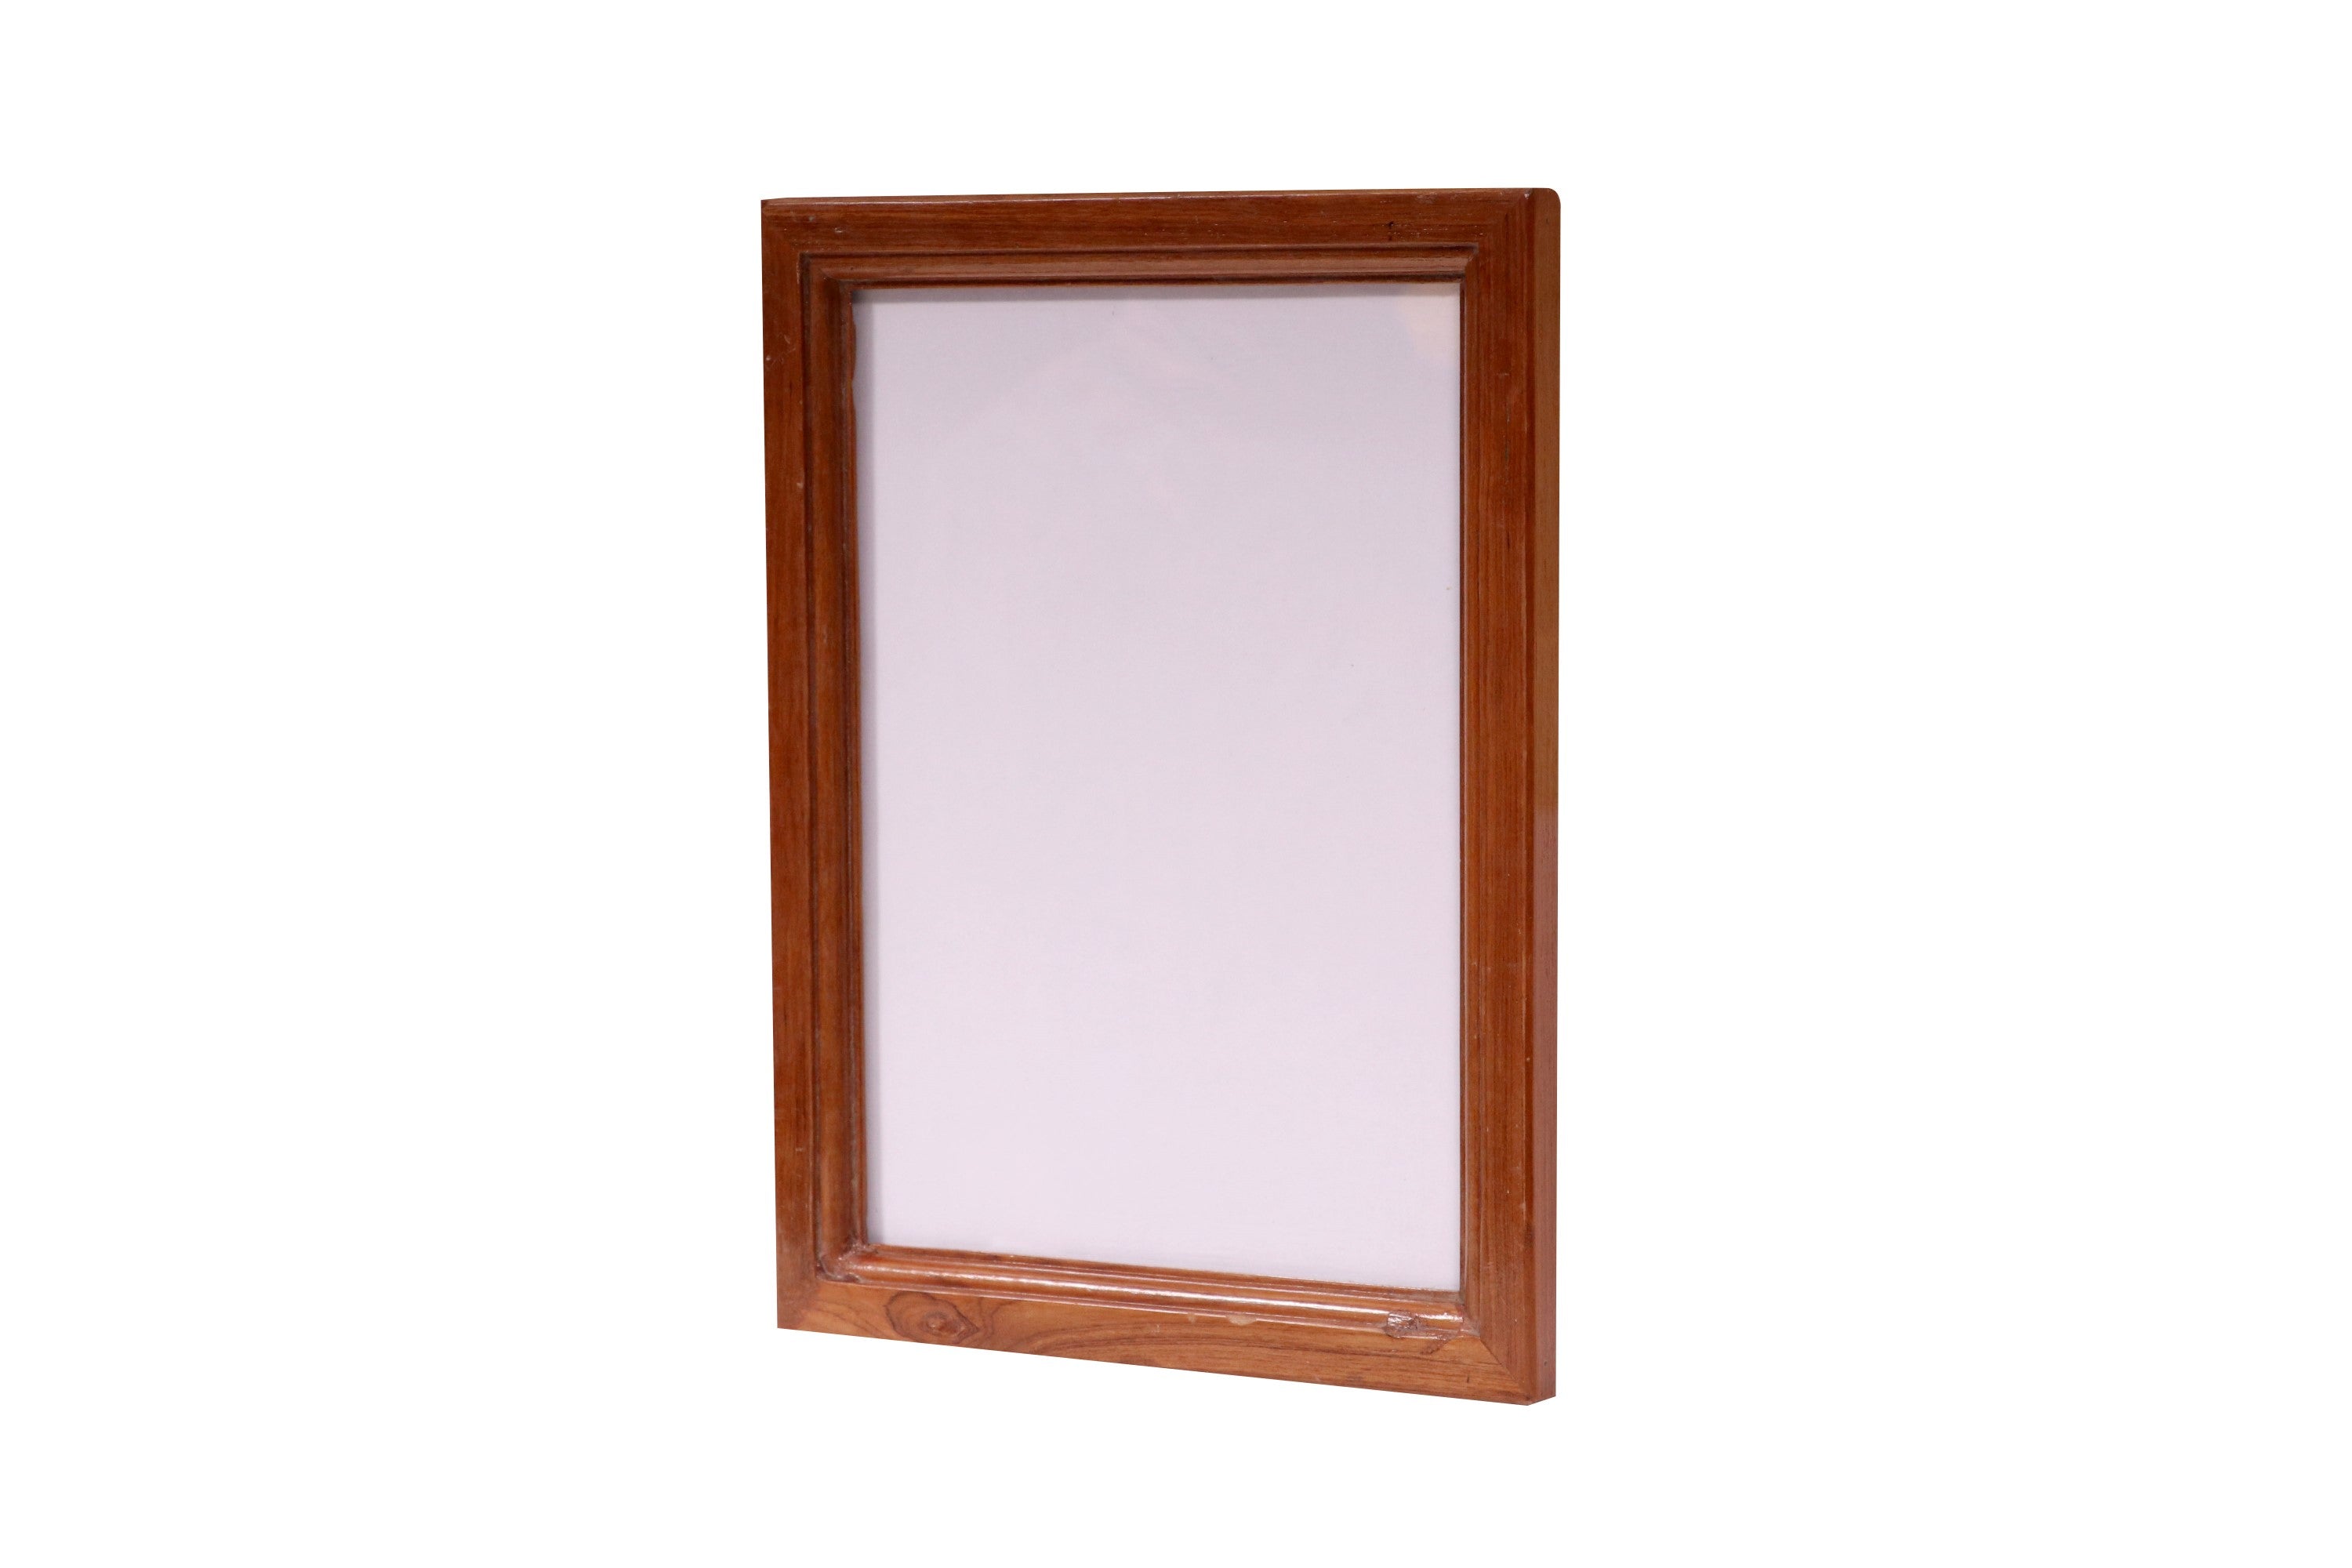 Teak wood Vintage A4 Concept Handmade Size Picture Frame Mirror